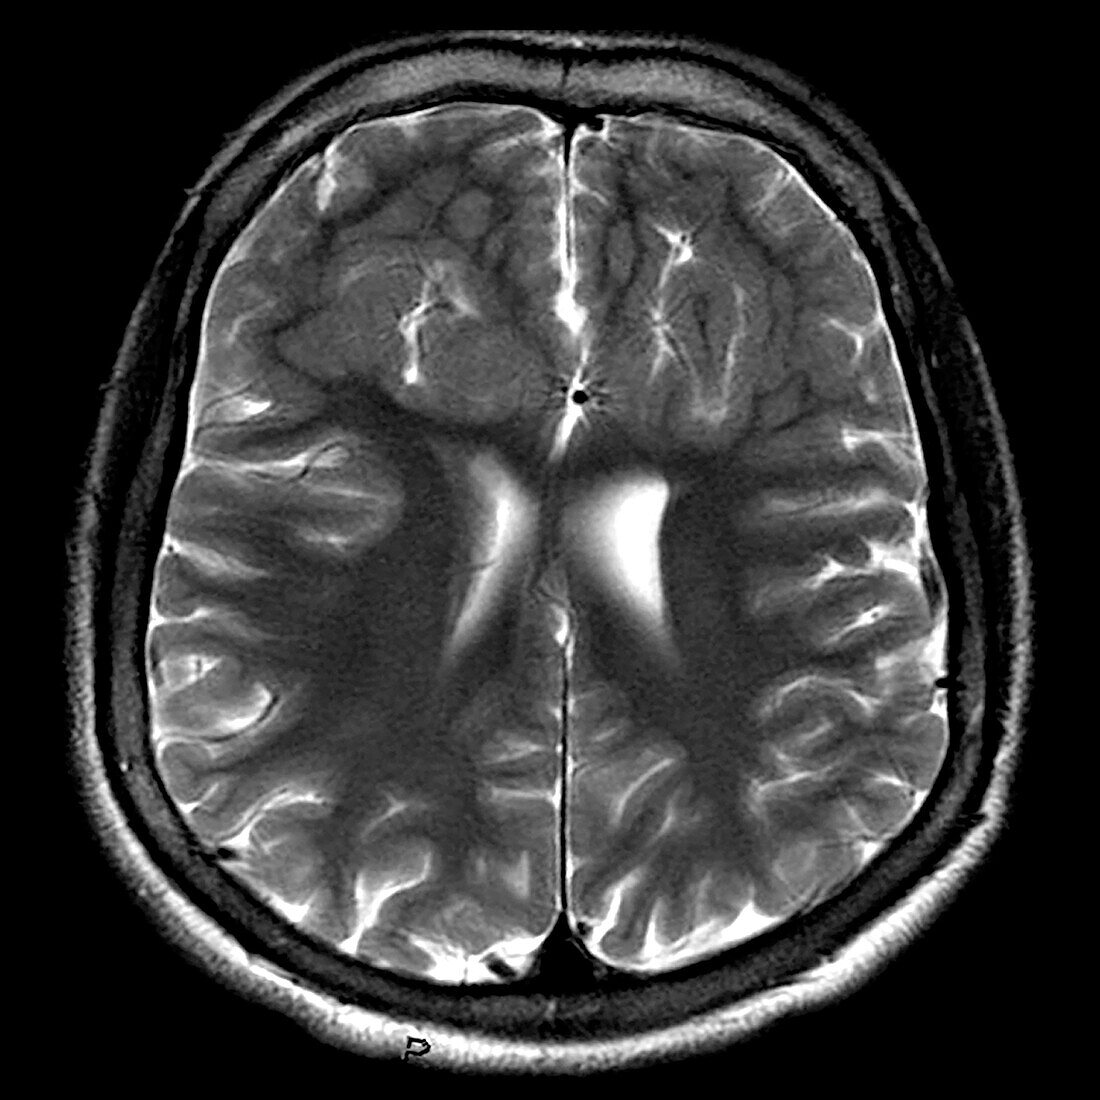 Malformation of Cortical Development MRI